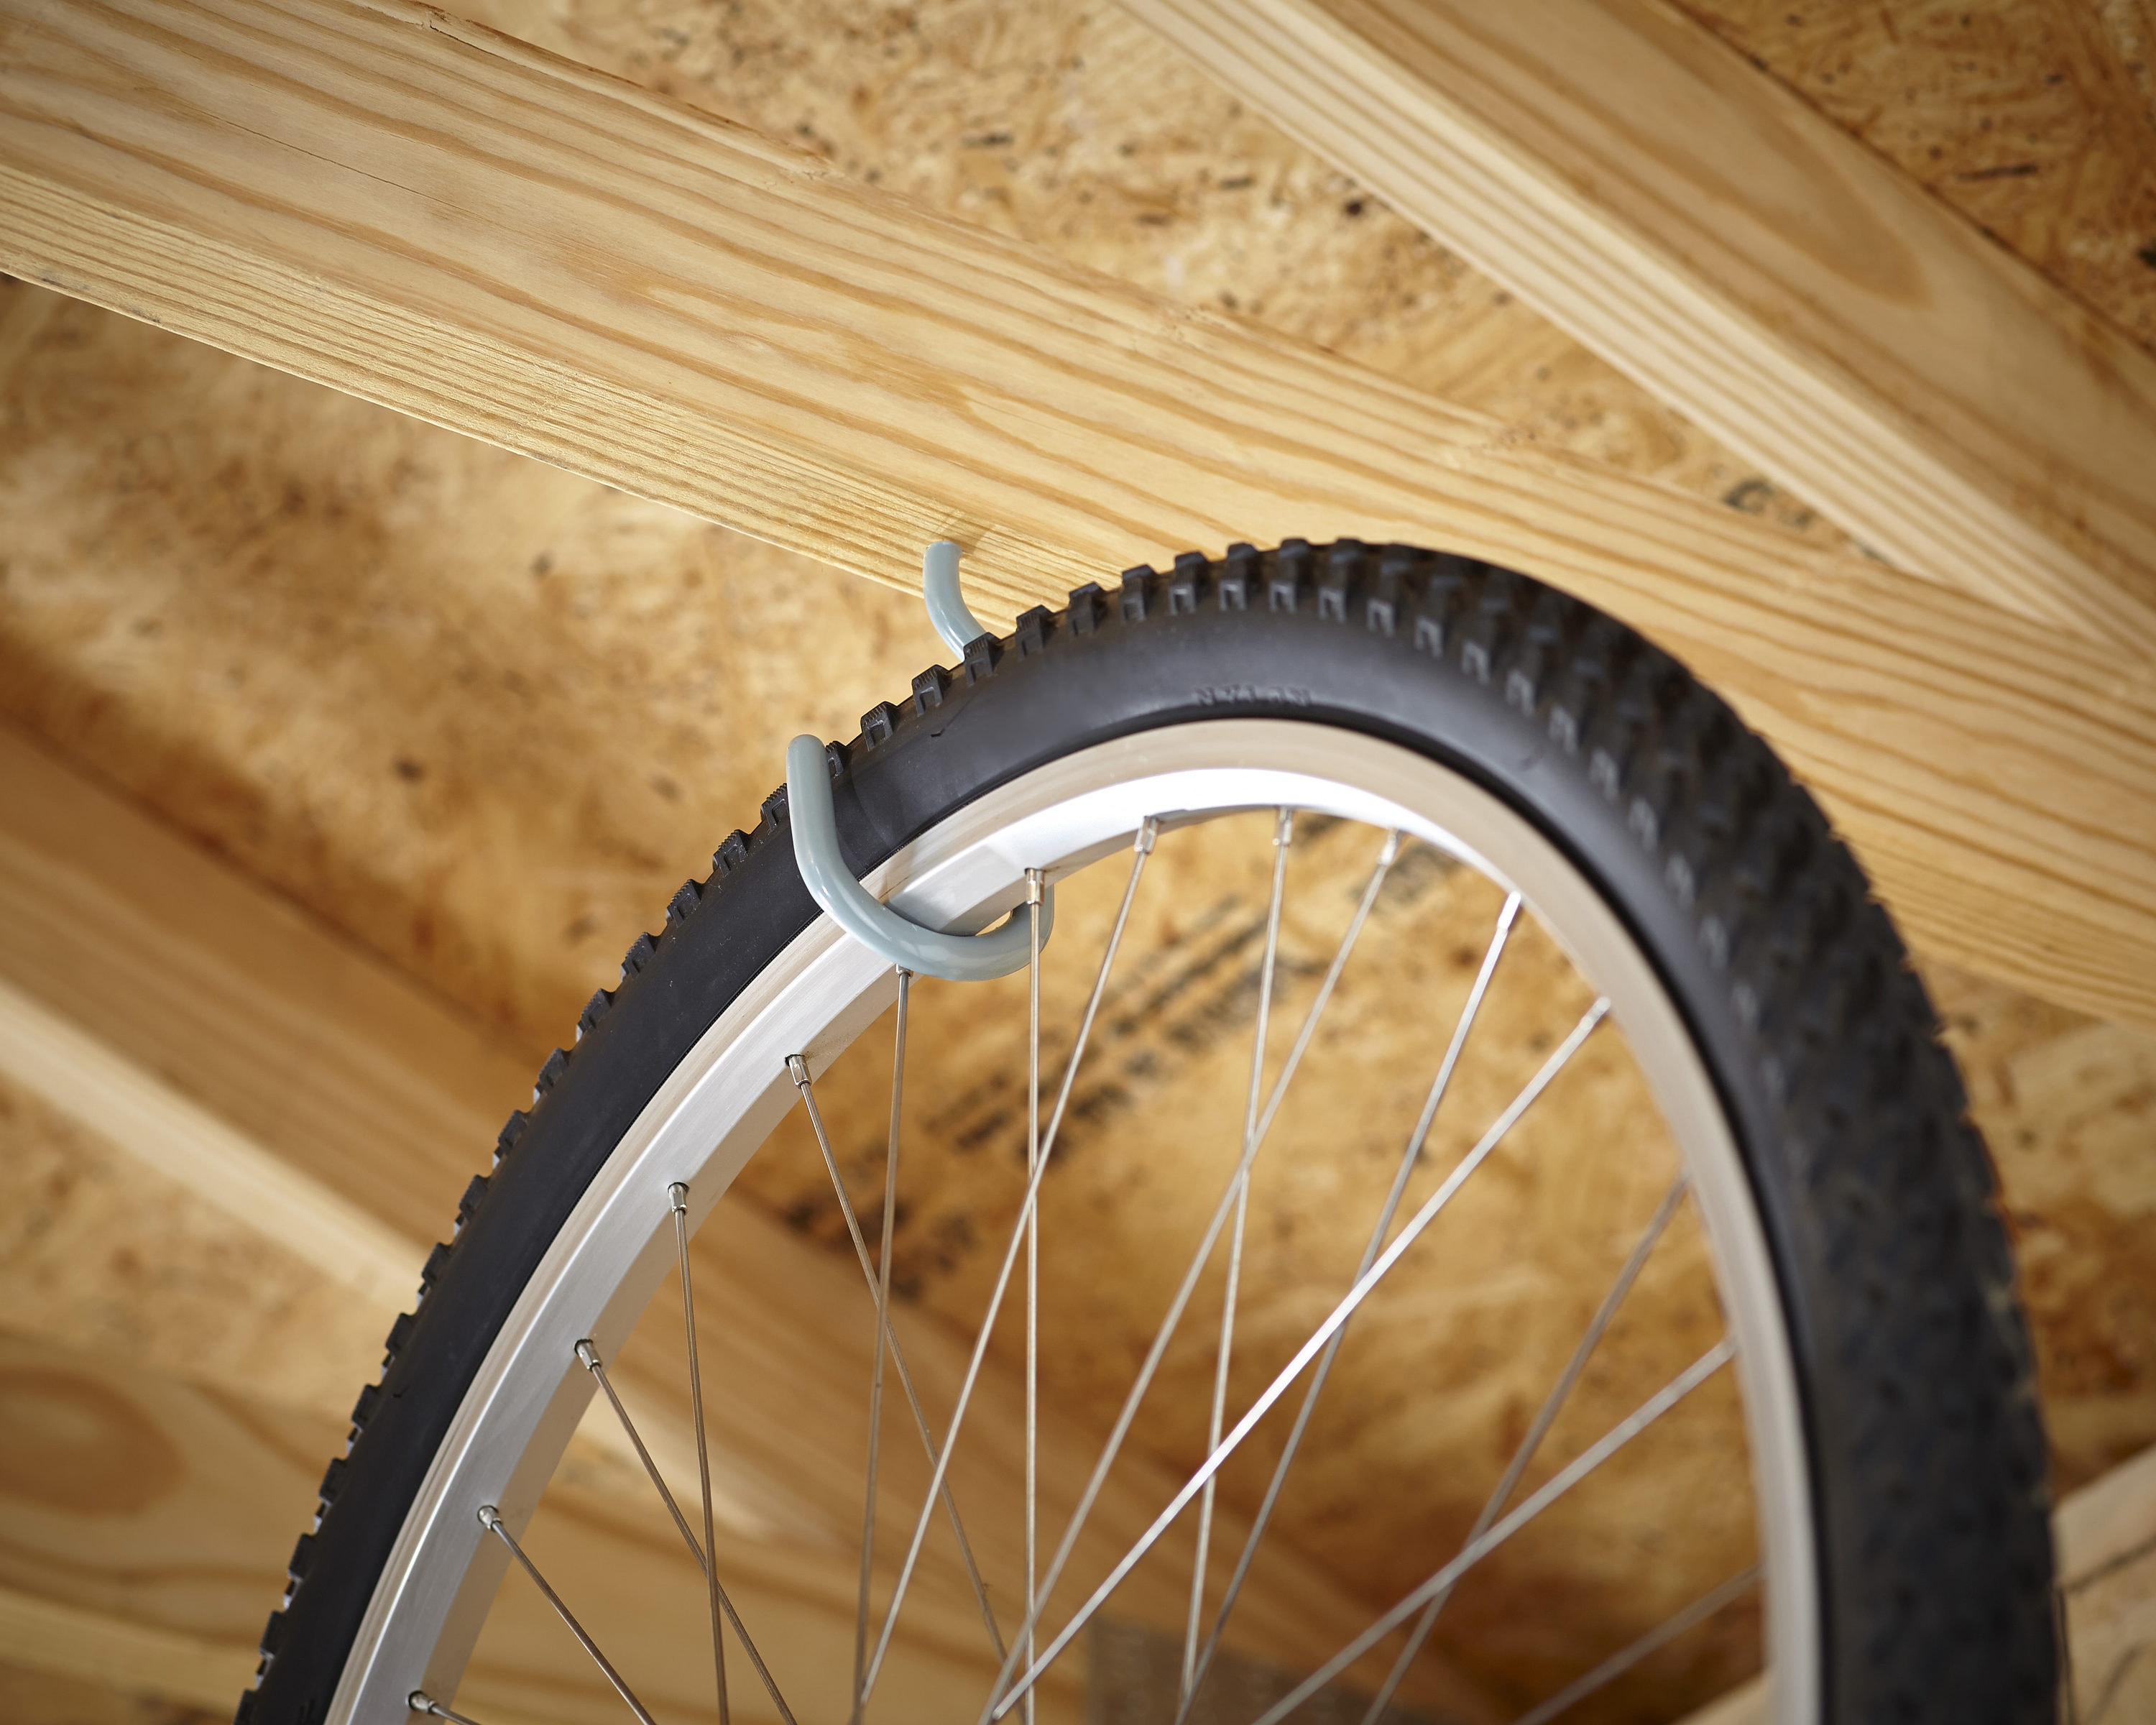 Sportsman Series Gray Steel Vertical Bike Hook for Garage or Basement Ceiling Storage - Holds 1 Bike, Easy Installation, Pulley Mechanism | 552911